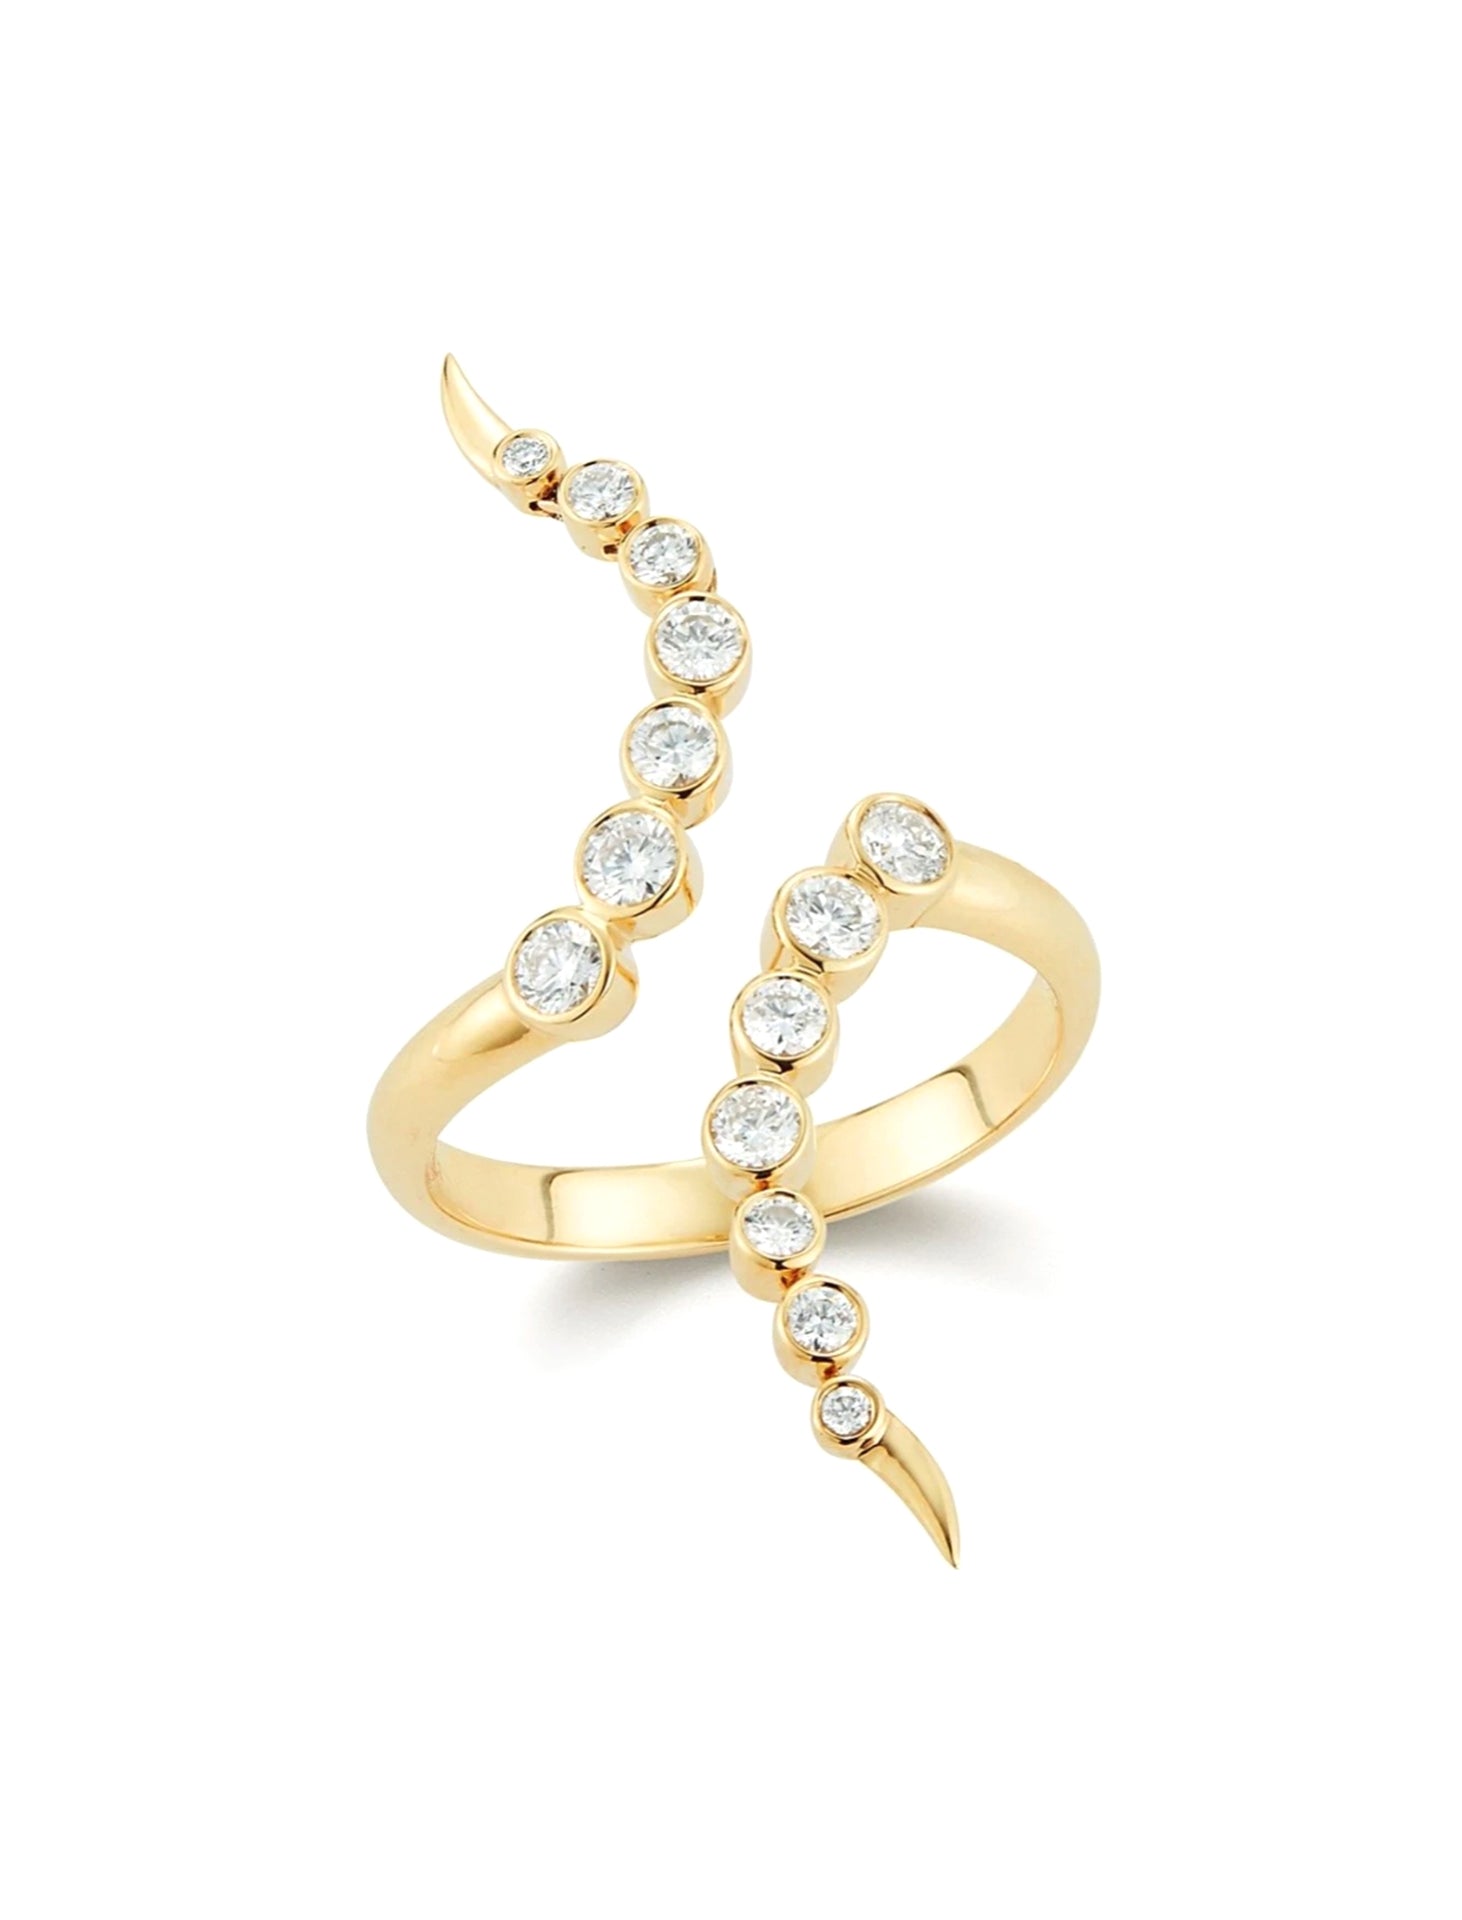 Siren North-South, 14K Yellow Gold + Bezel Set Diamond Ring